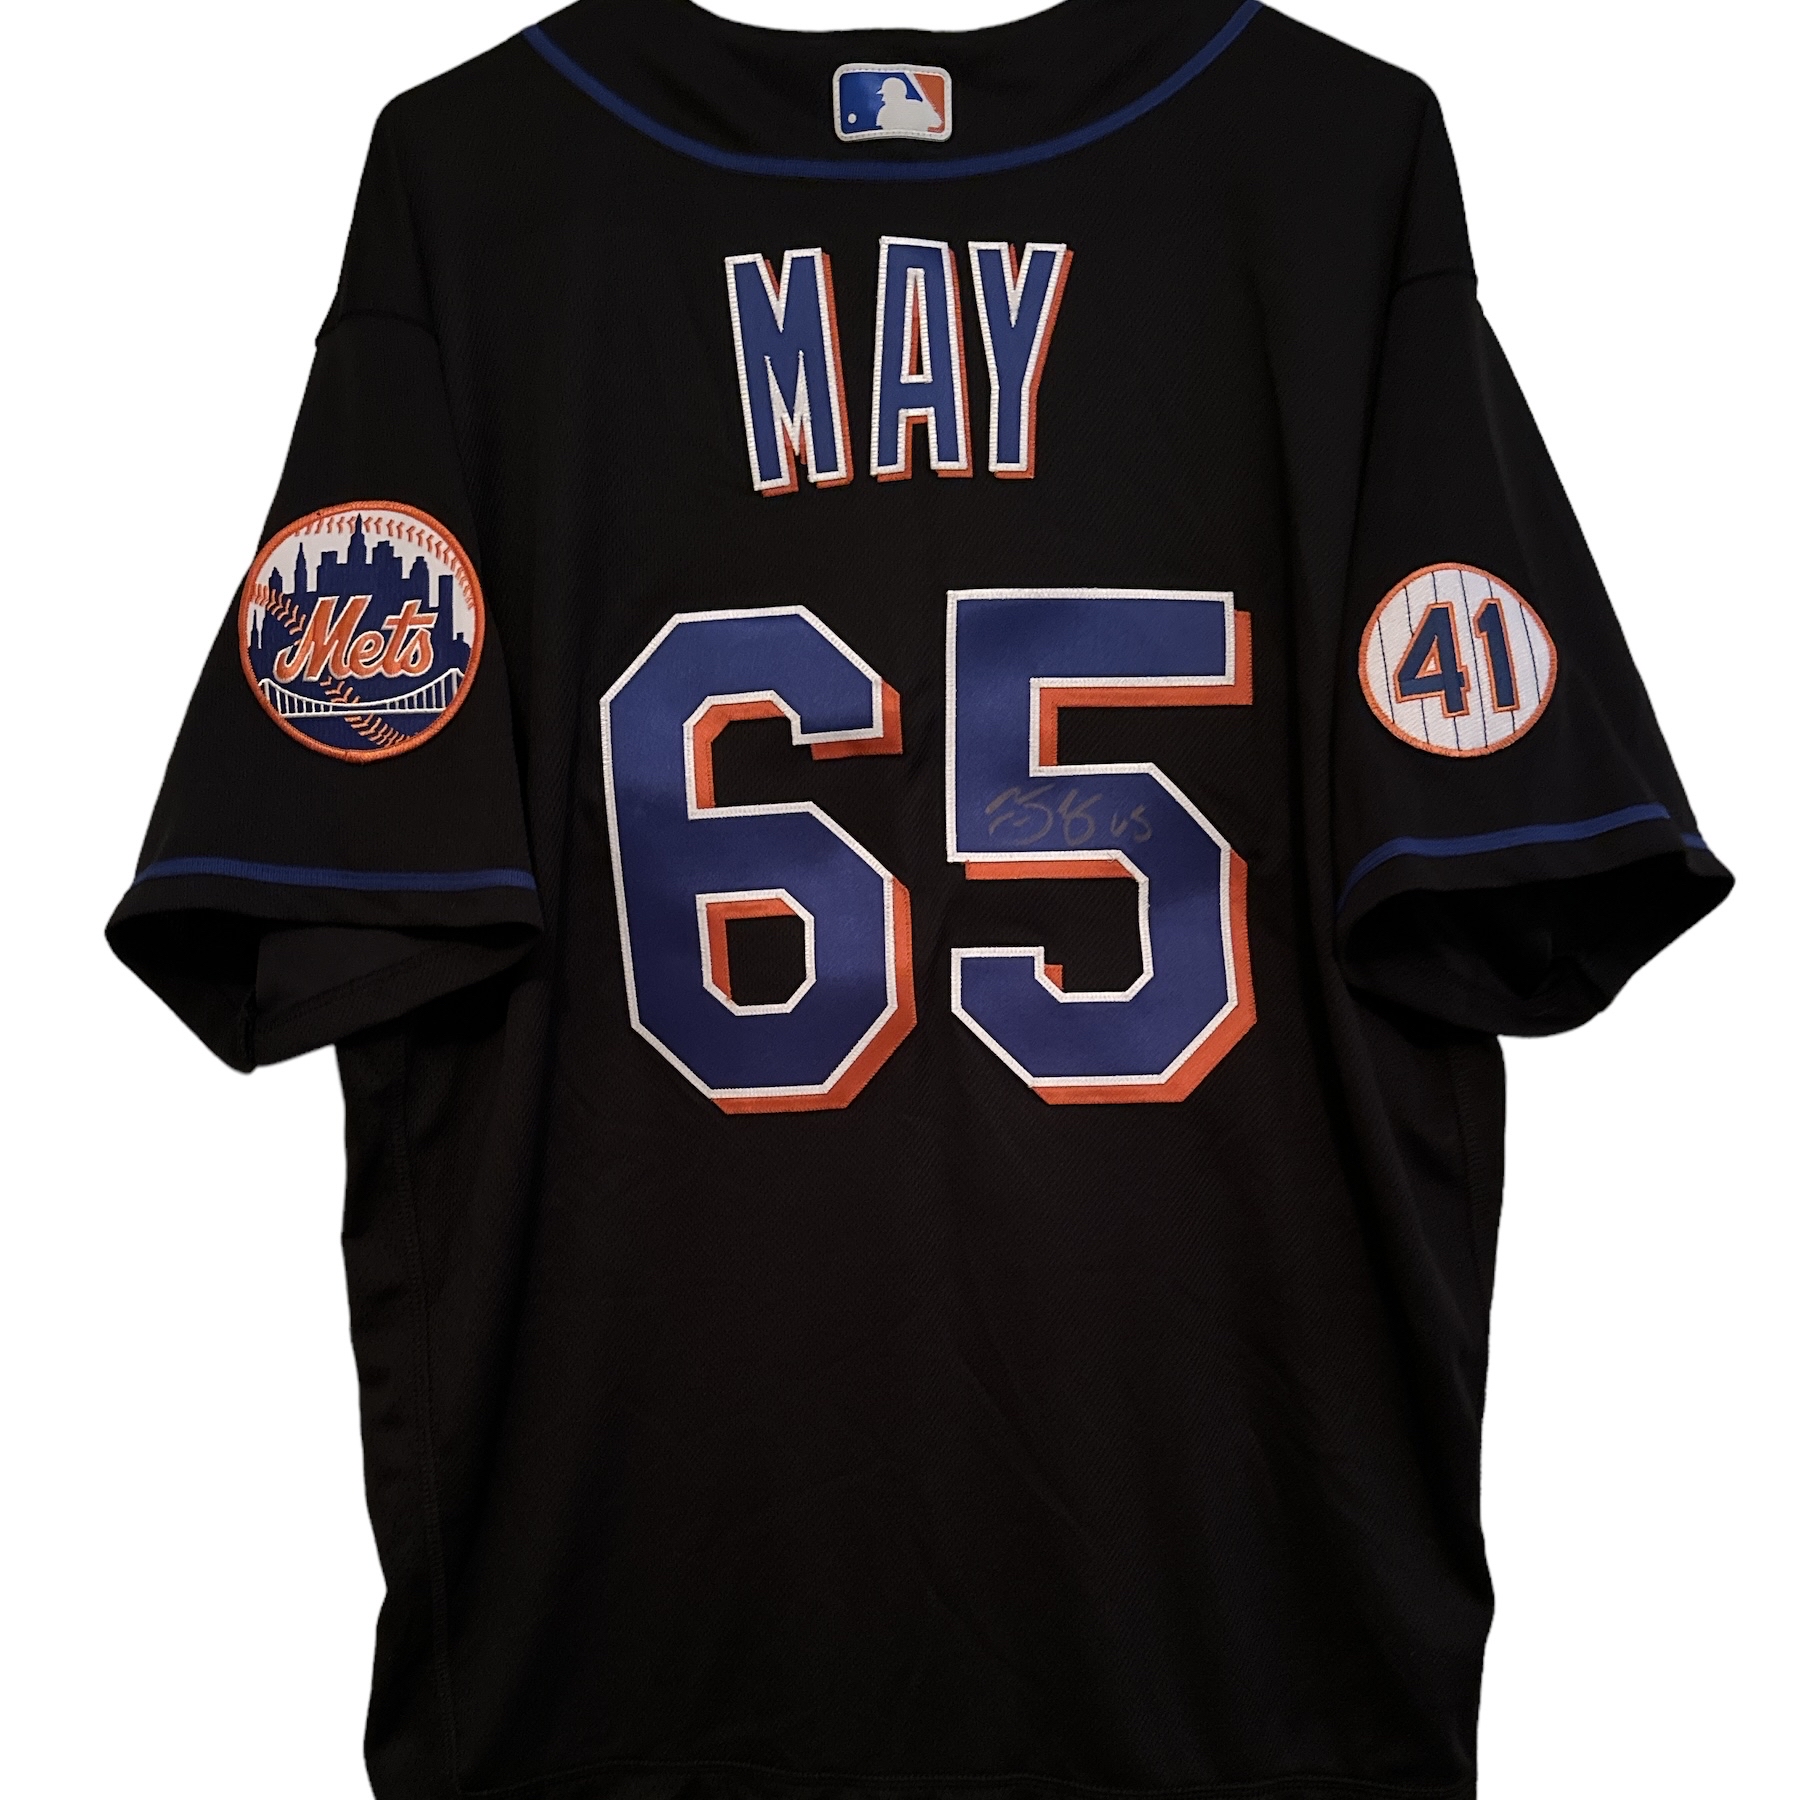 Signed Trevor May Black New York Mets Jersey - Trevor May